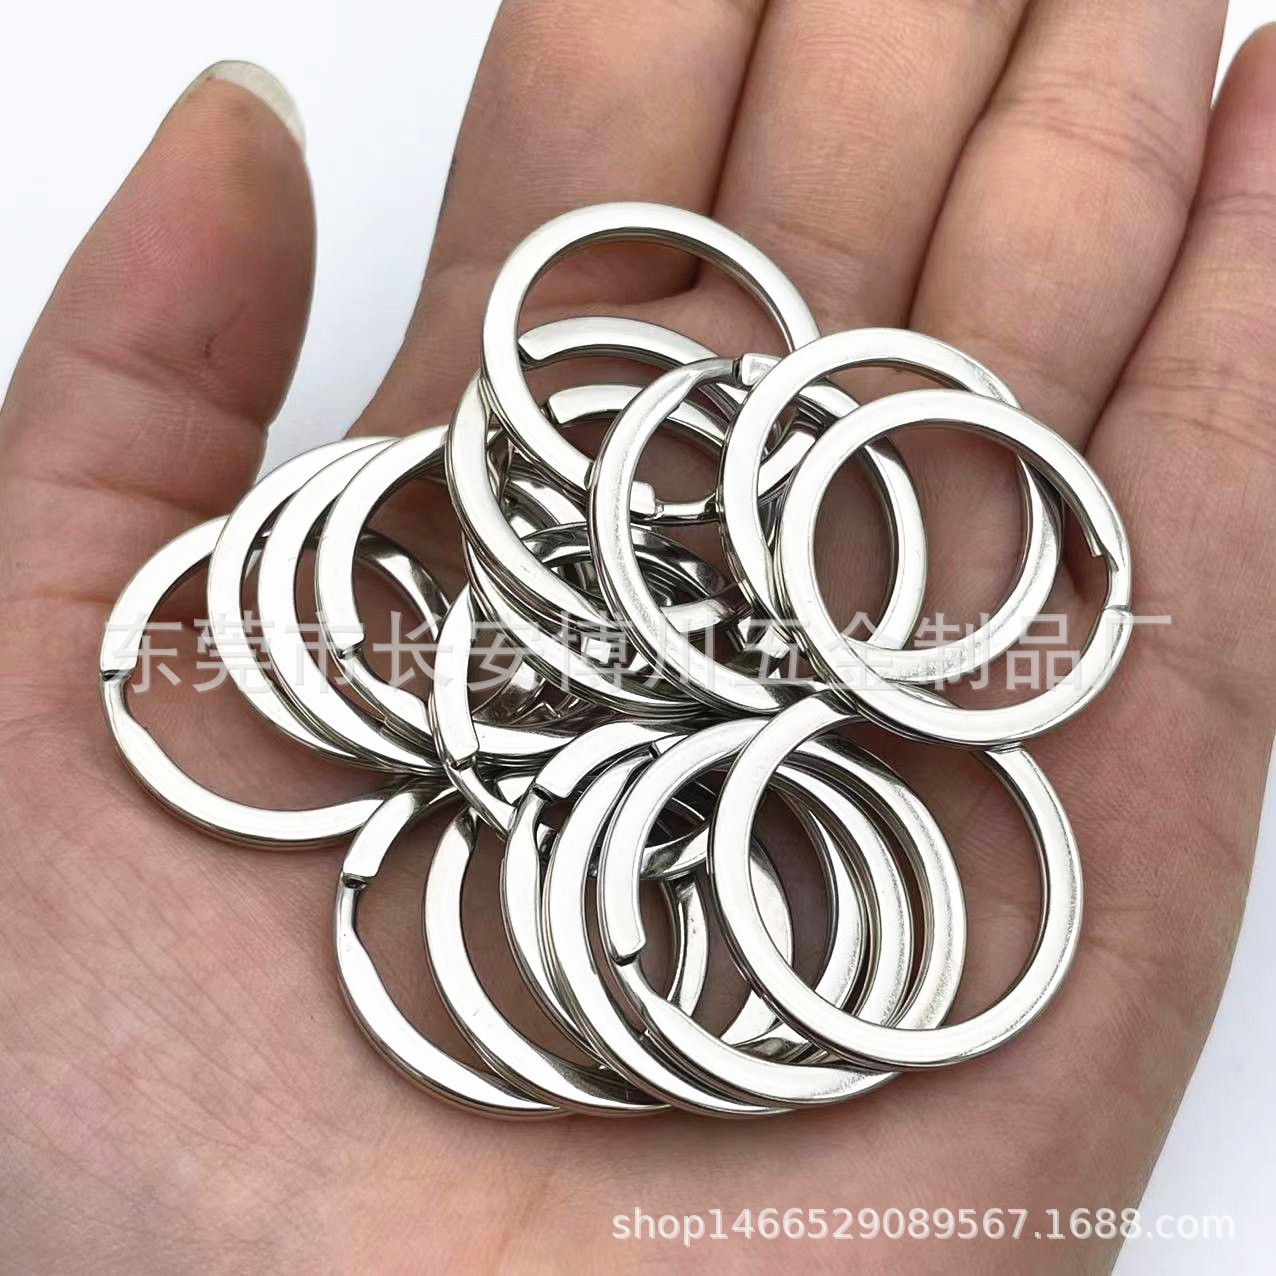 Dongguan Quality Spot Supply Metal Black Key Ring Ring Flat Ring Flat Ring with Chain Car Key Ring Accessories